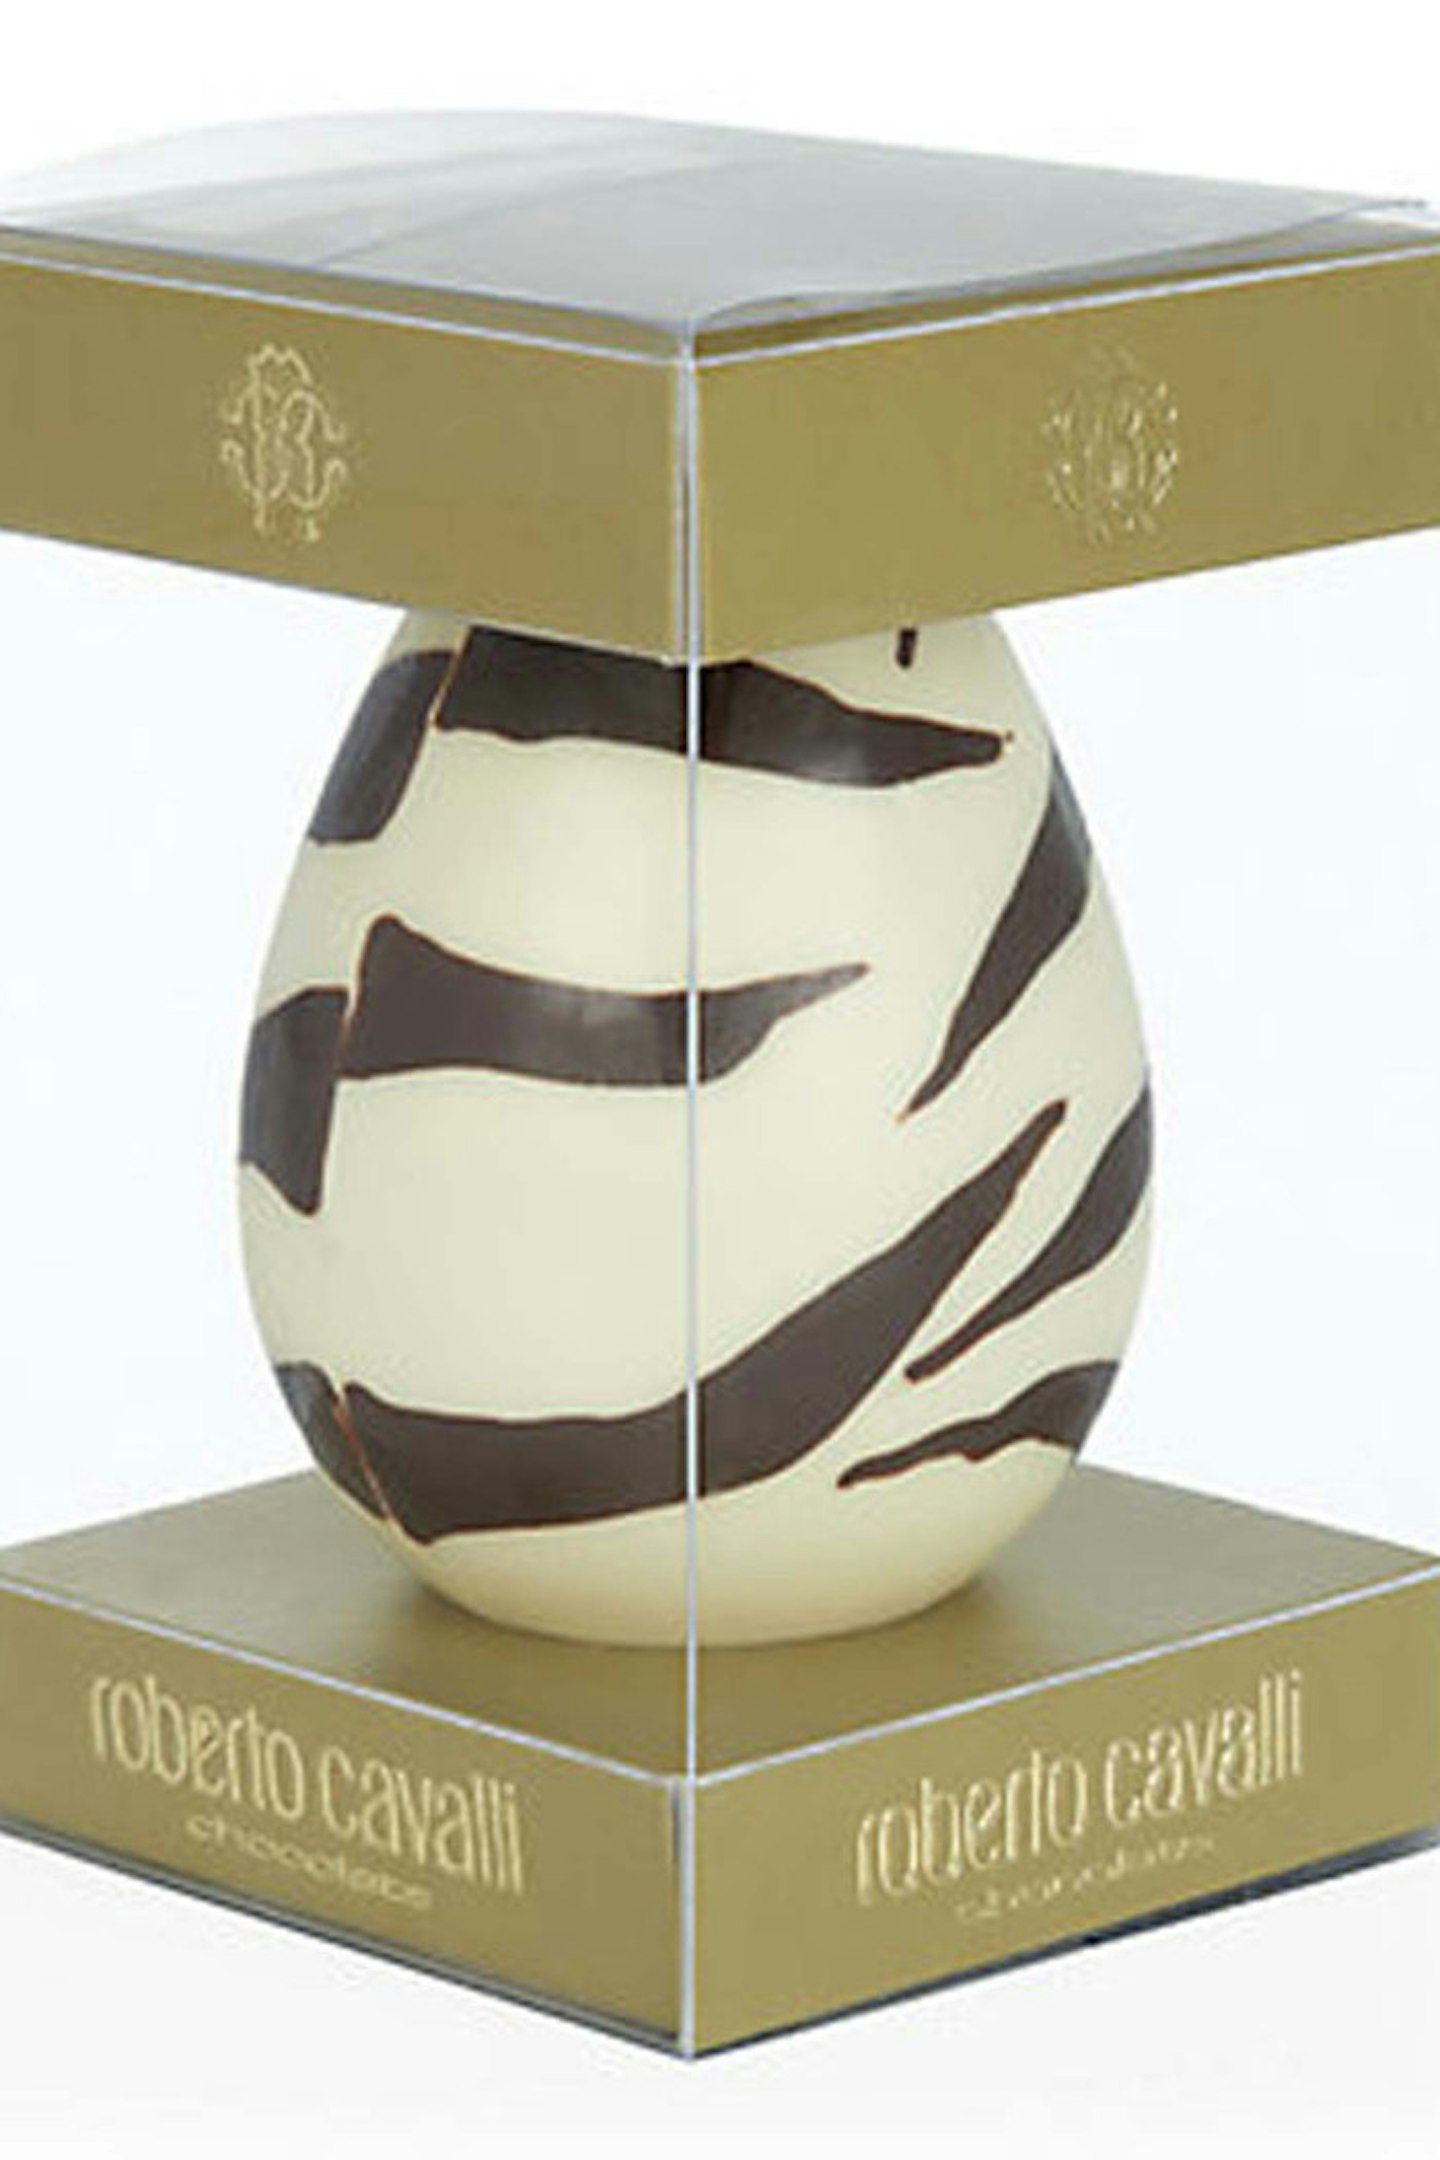 Roberto Cavalli Zebra White Chocolate Easter Egg 29.95 harrods